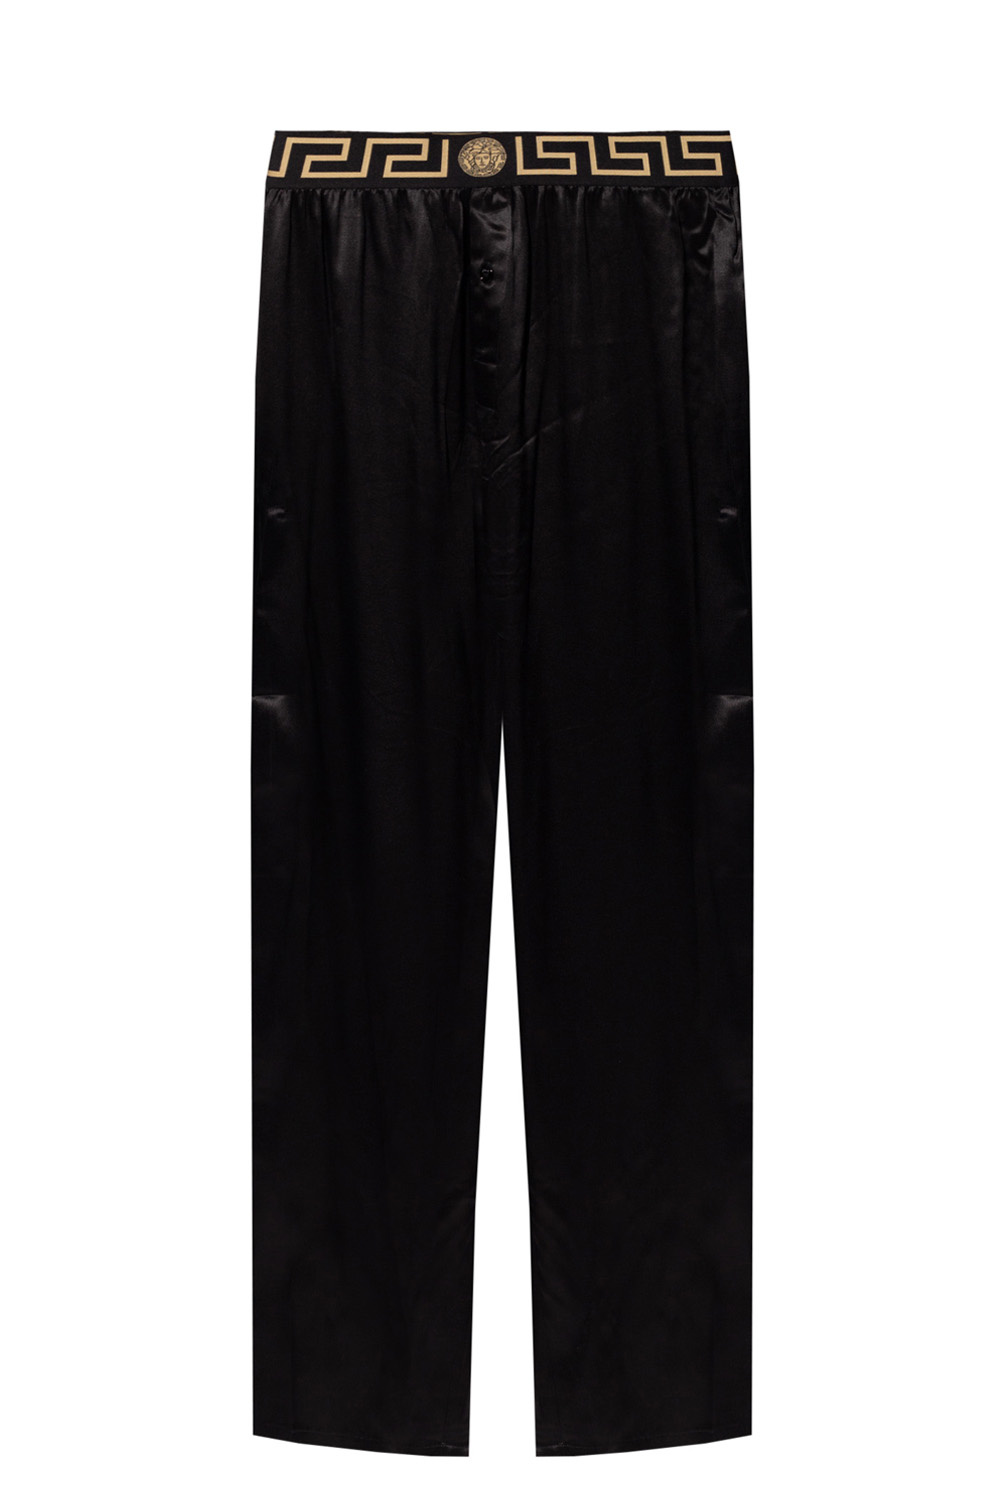 ASOS 4505 icon legging with bum sculpt seam detail and pocket -  Biname-fmedShops Nigeria - Black Pyjama pants Versace